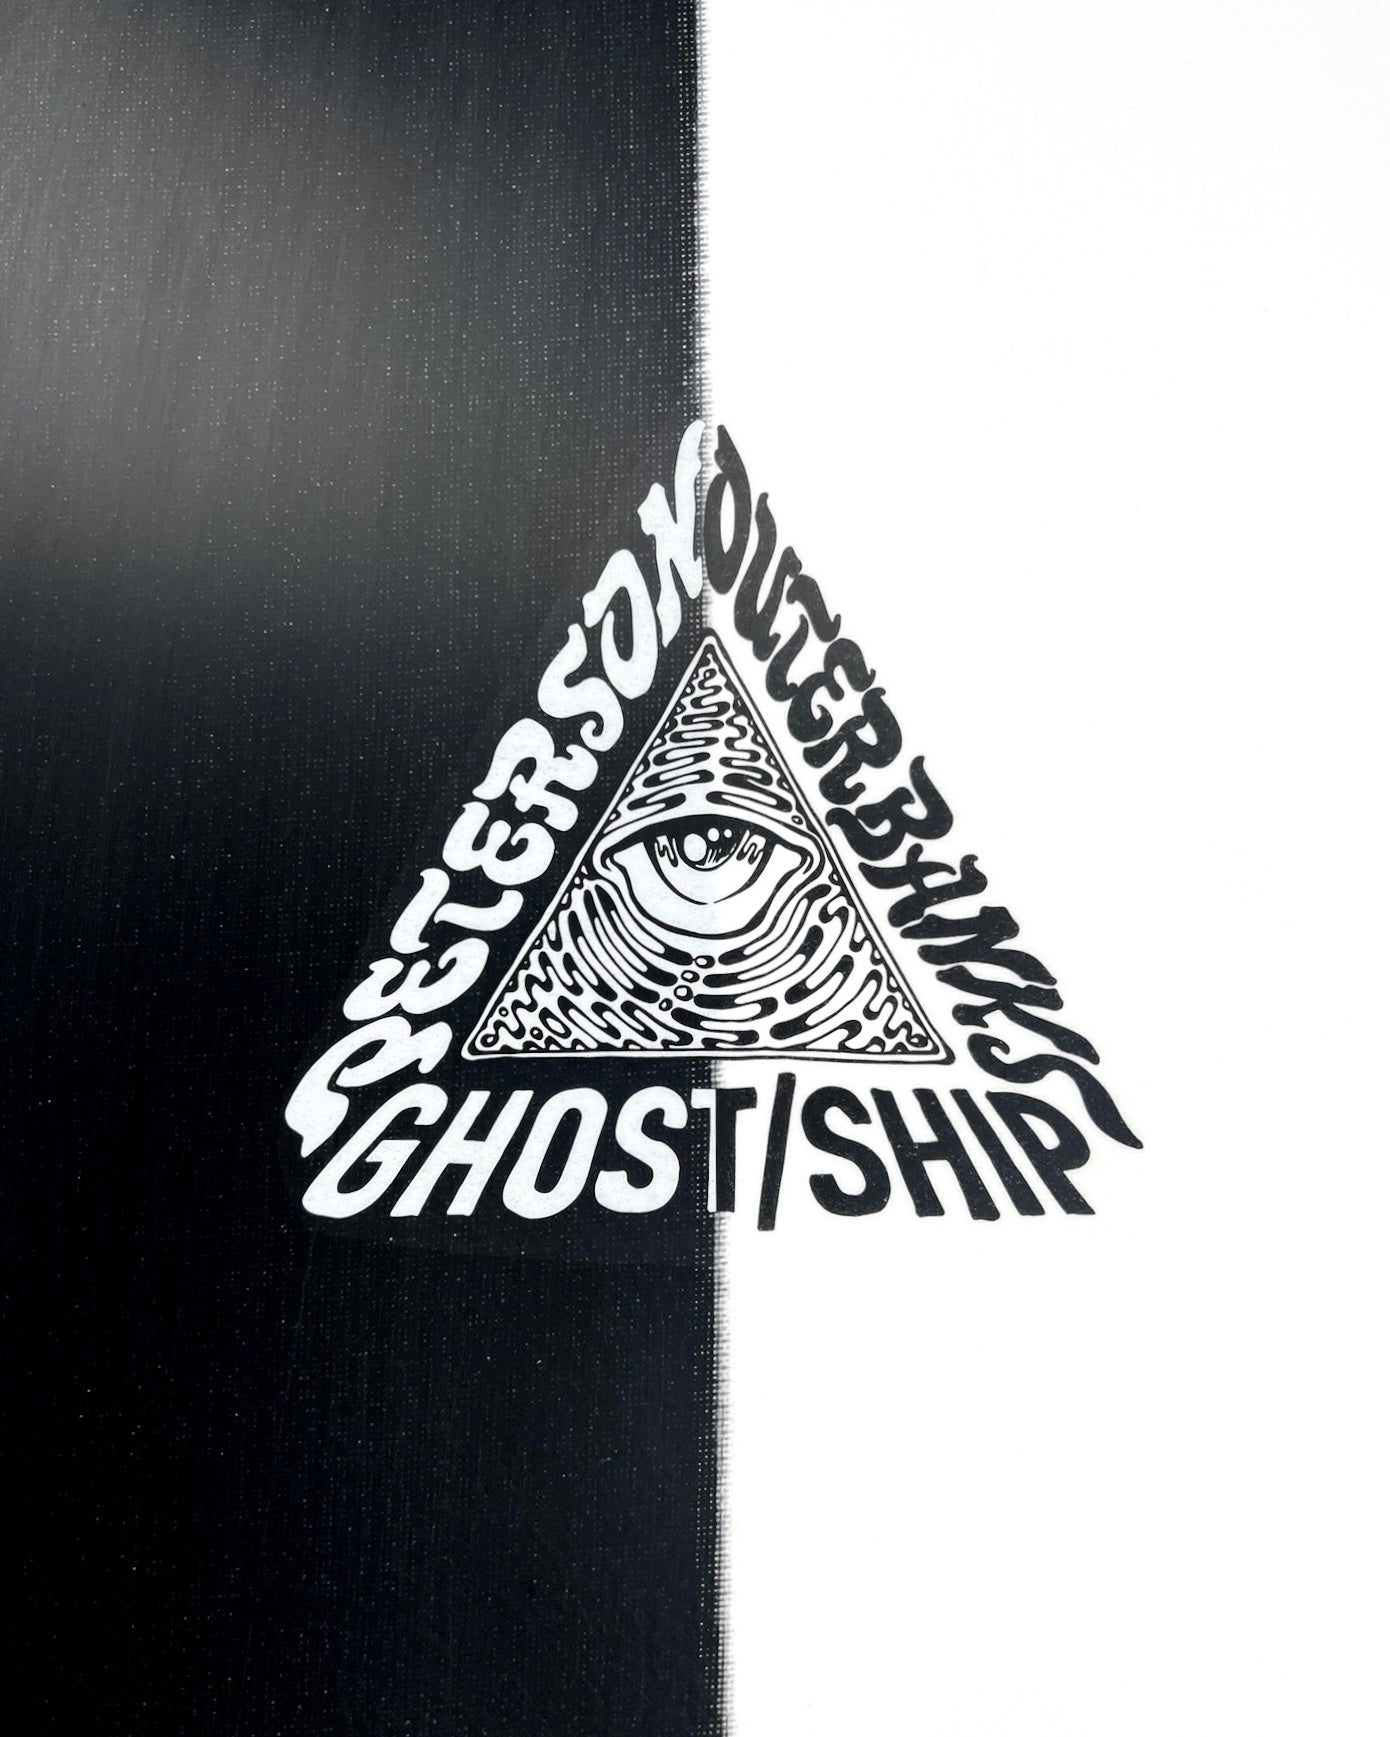 Ghost Ship x Josh Peterson Black & White Vee Twin Surfboard 6’6” - GHOSTSHIP.Supply